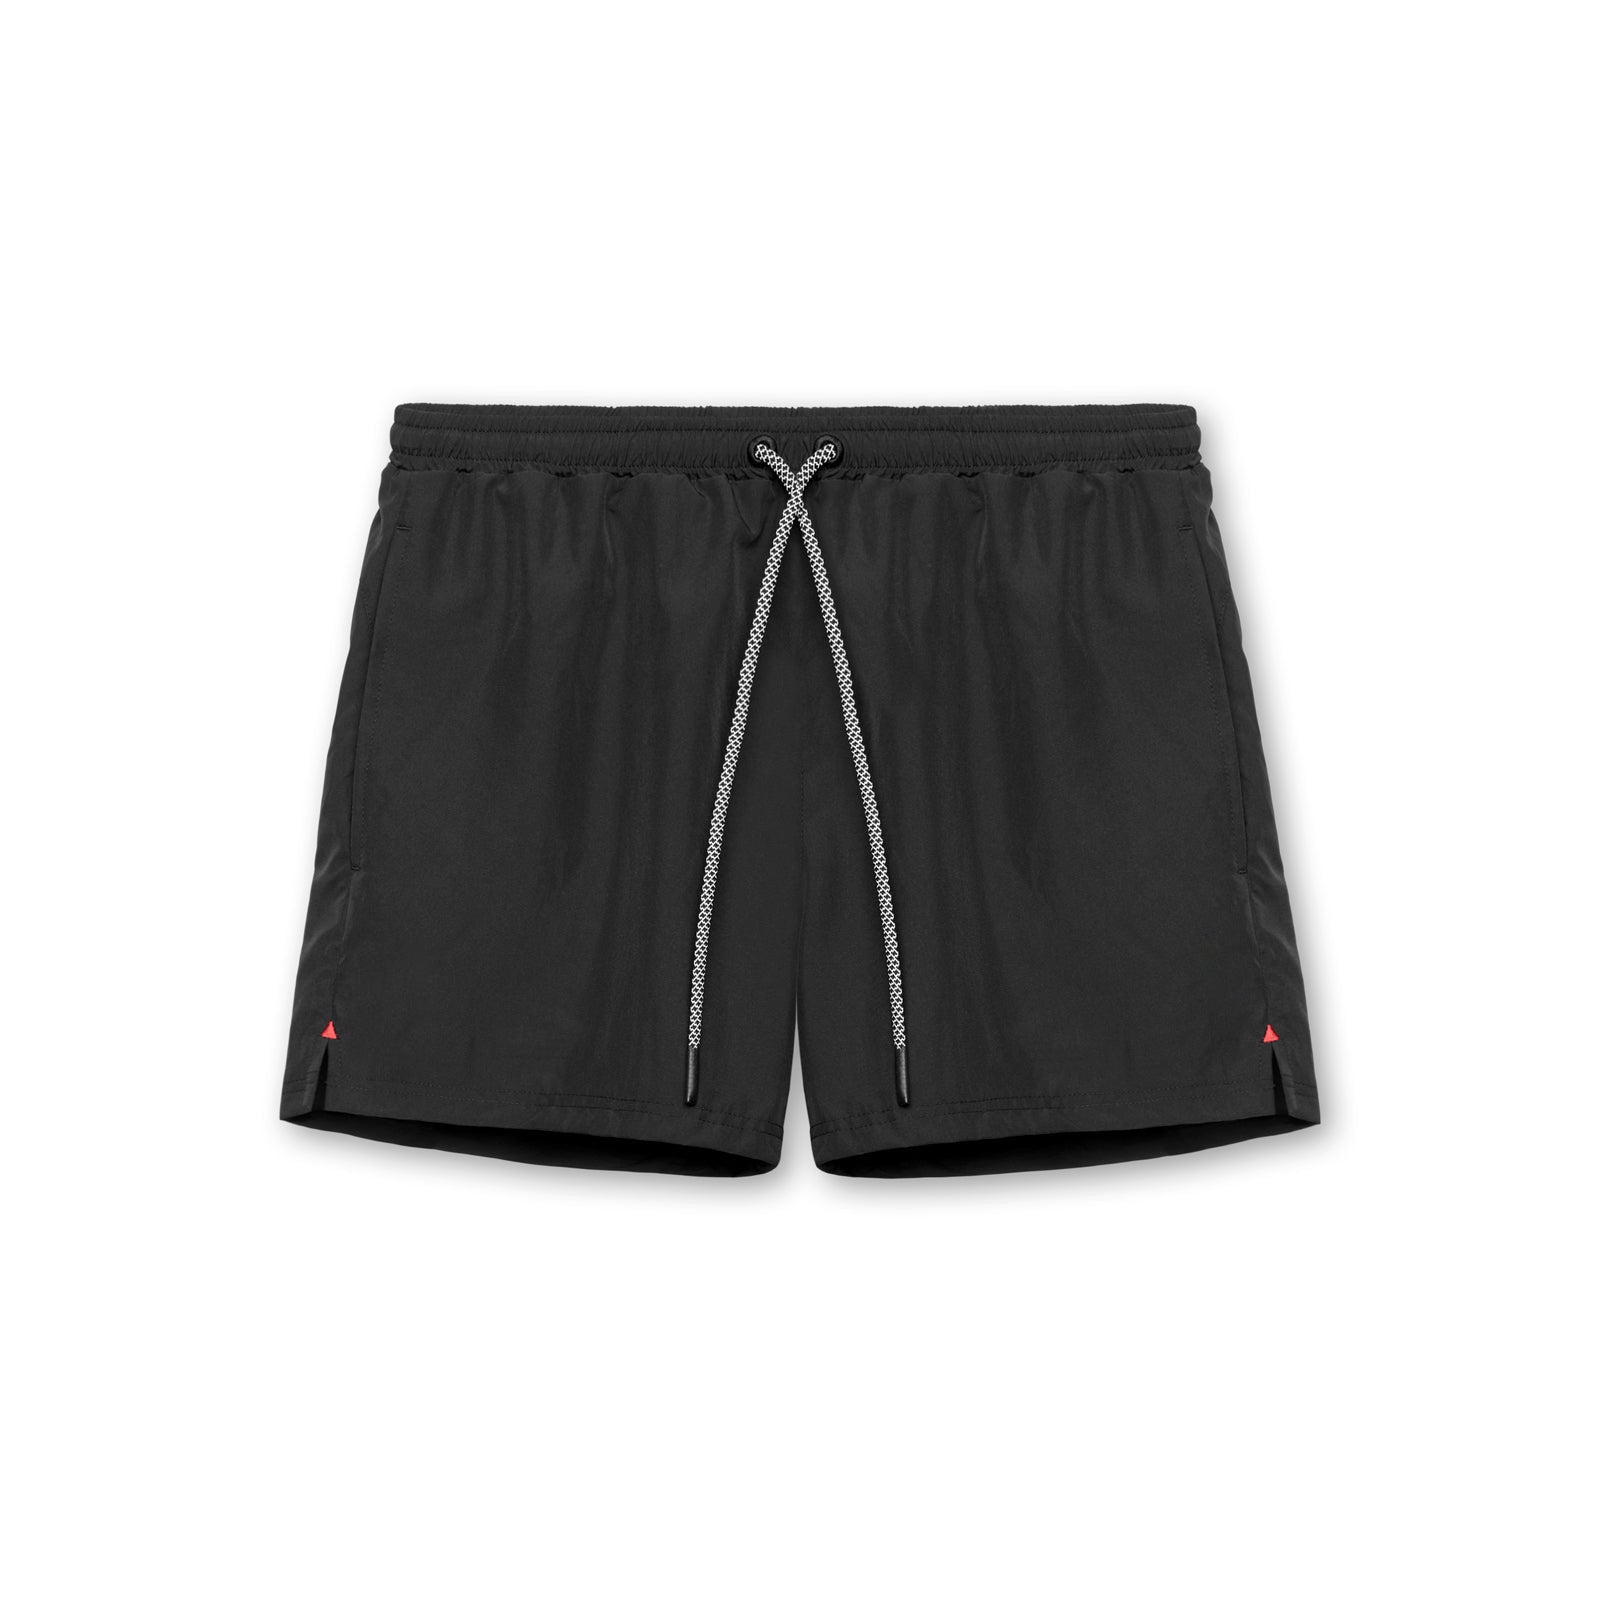 ALLRJ Shorts Light Board Black / L Muscle Workout Summer Sports Casual Basketball Men's Running Training Wear Shorts